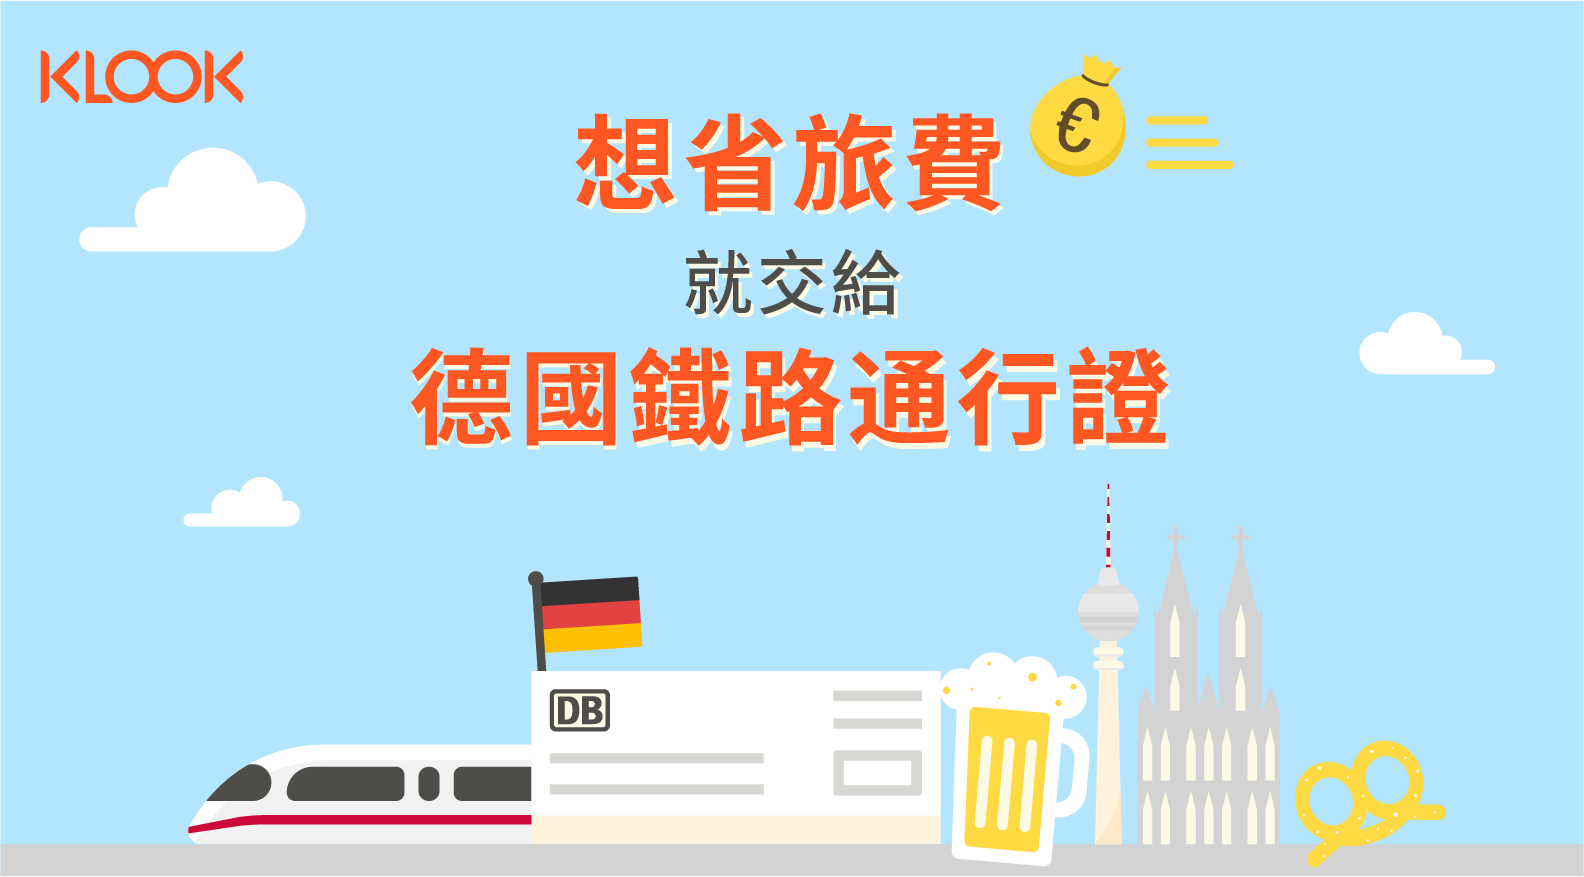 Eurail 歐鐵德國火車通行證（電子票）